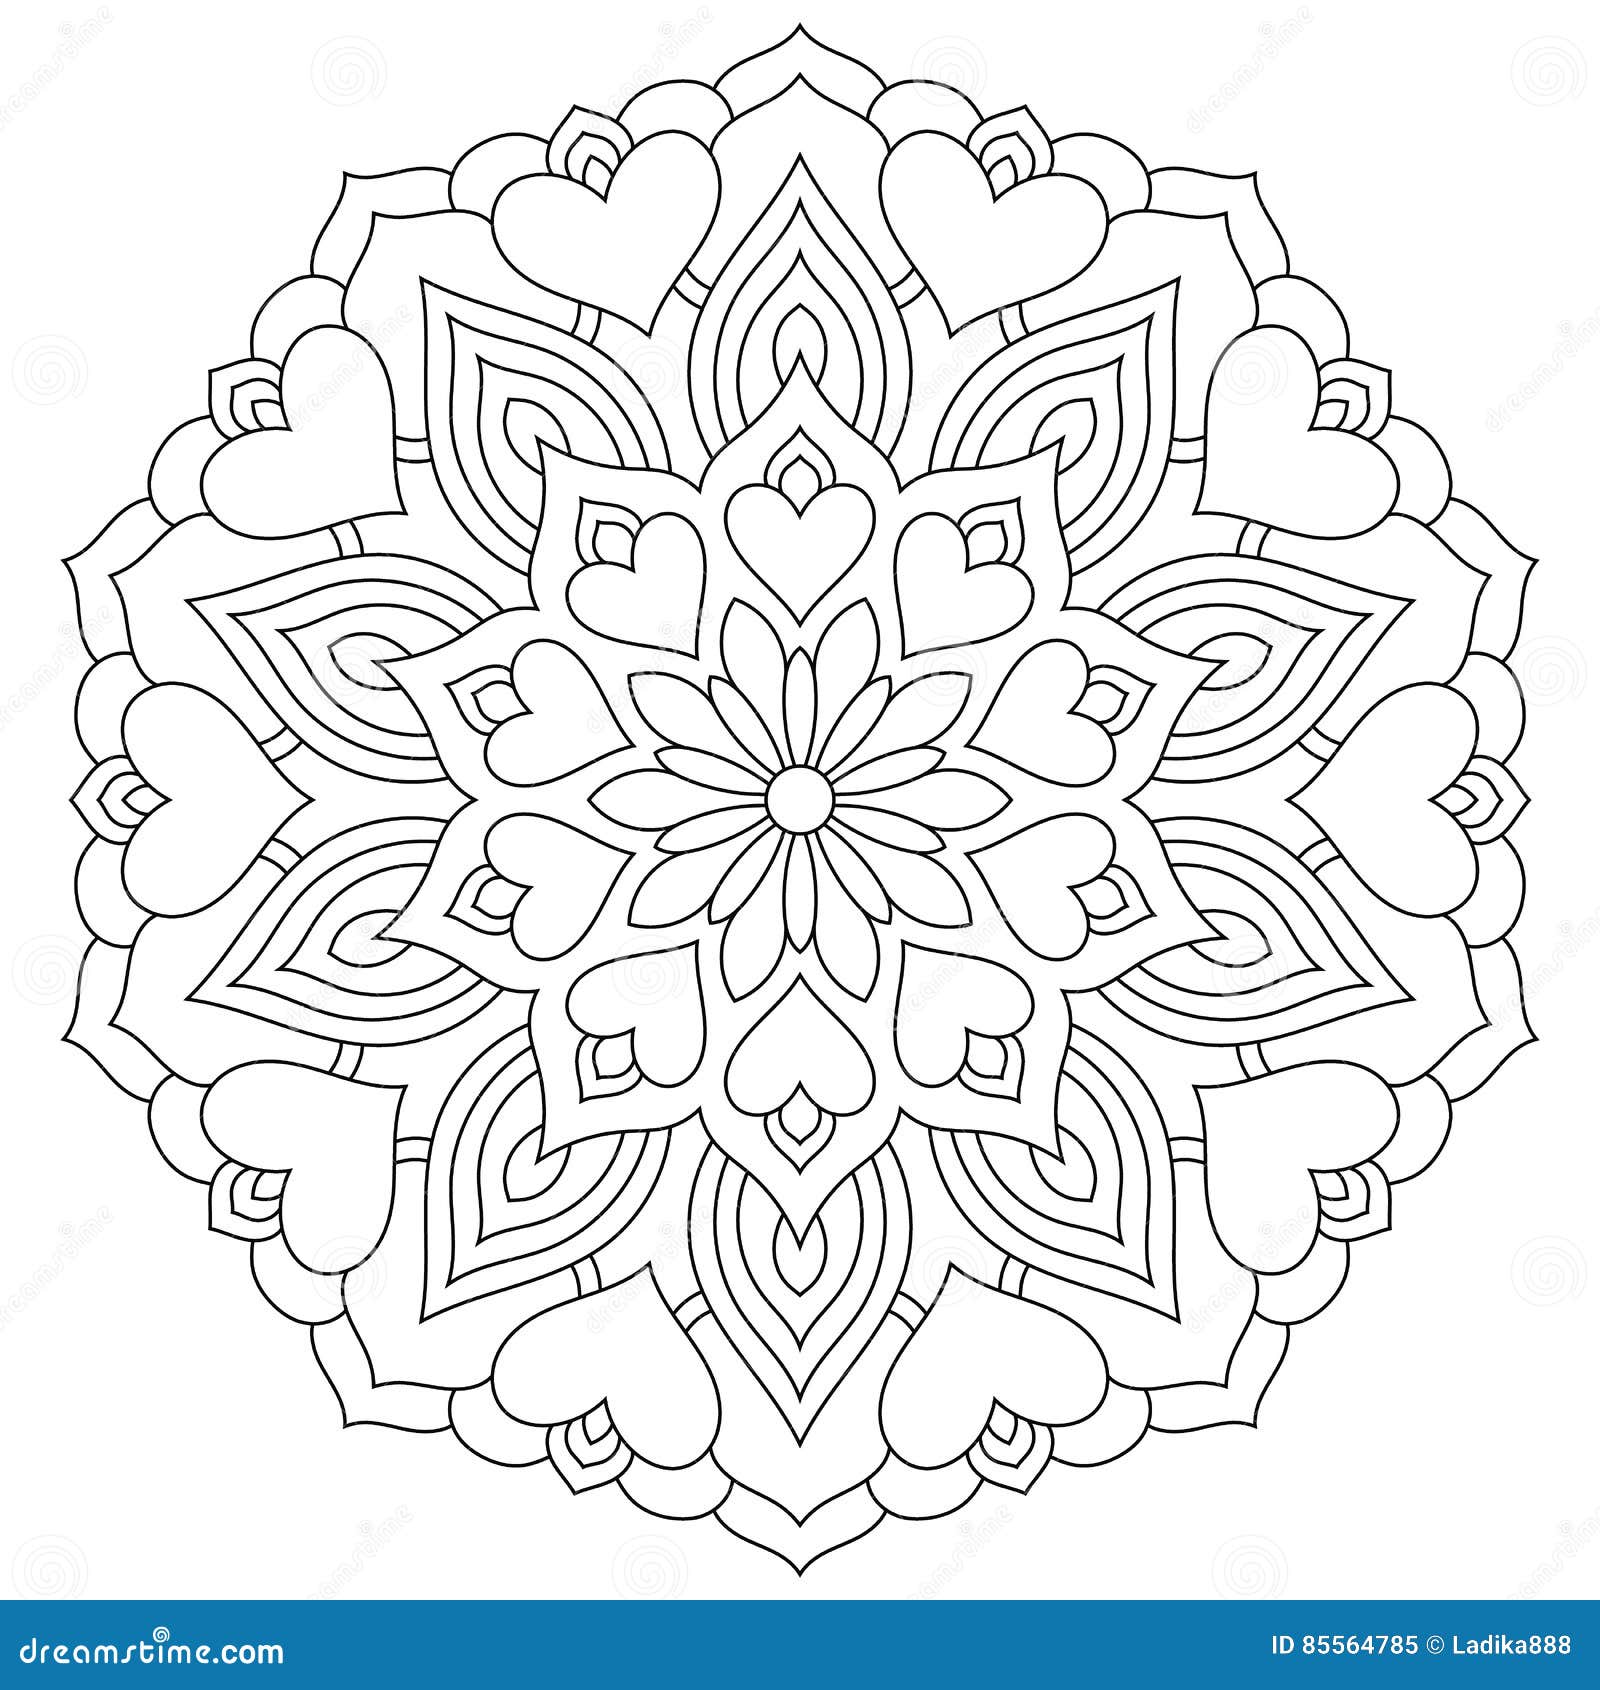 Mandala coloring stock illustrations â mandala coloring stock illustrations vectors clipart